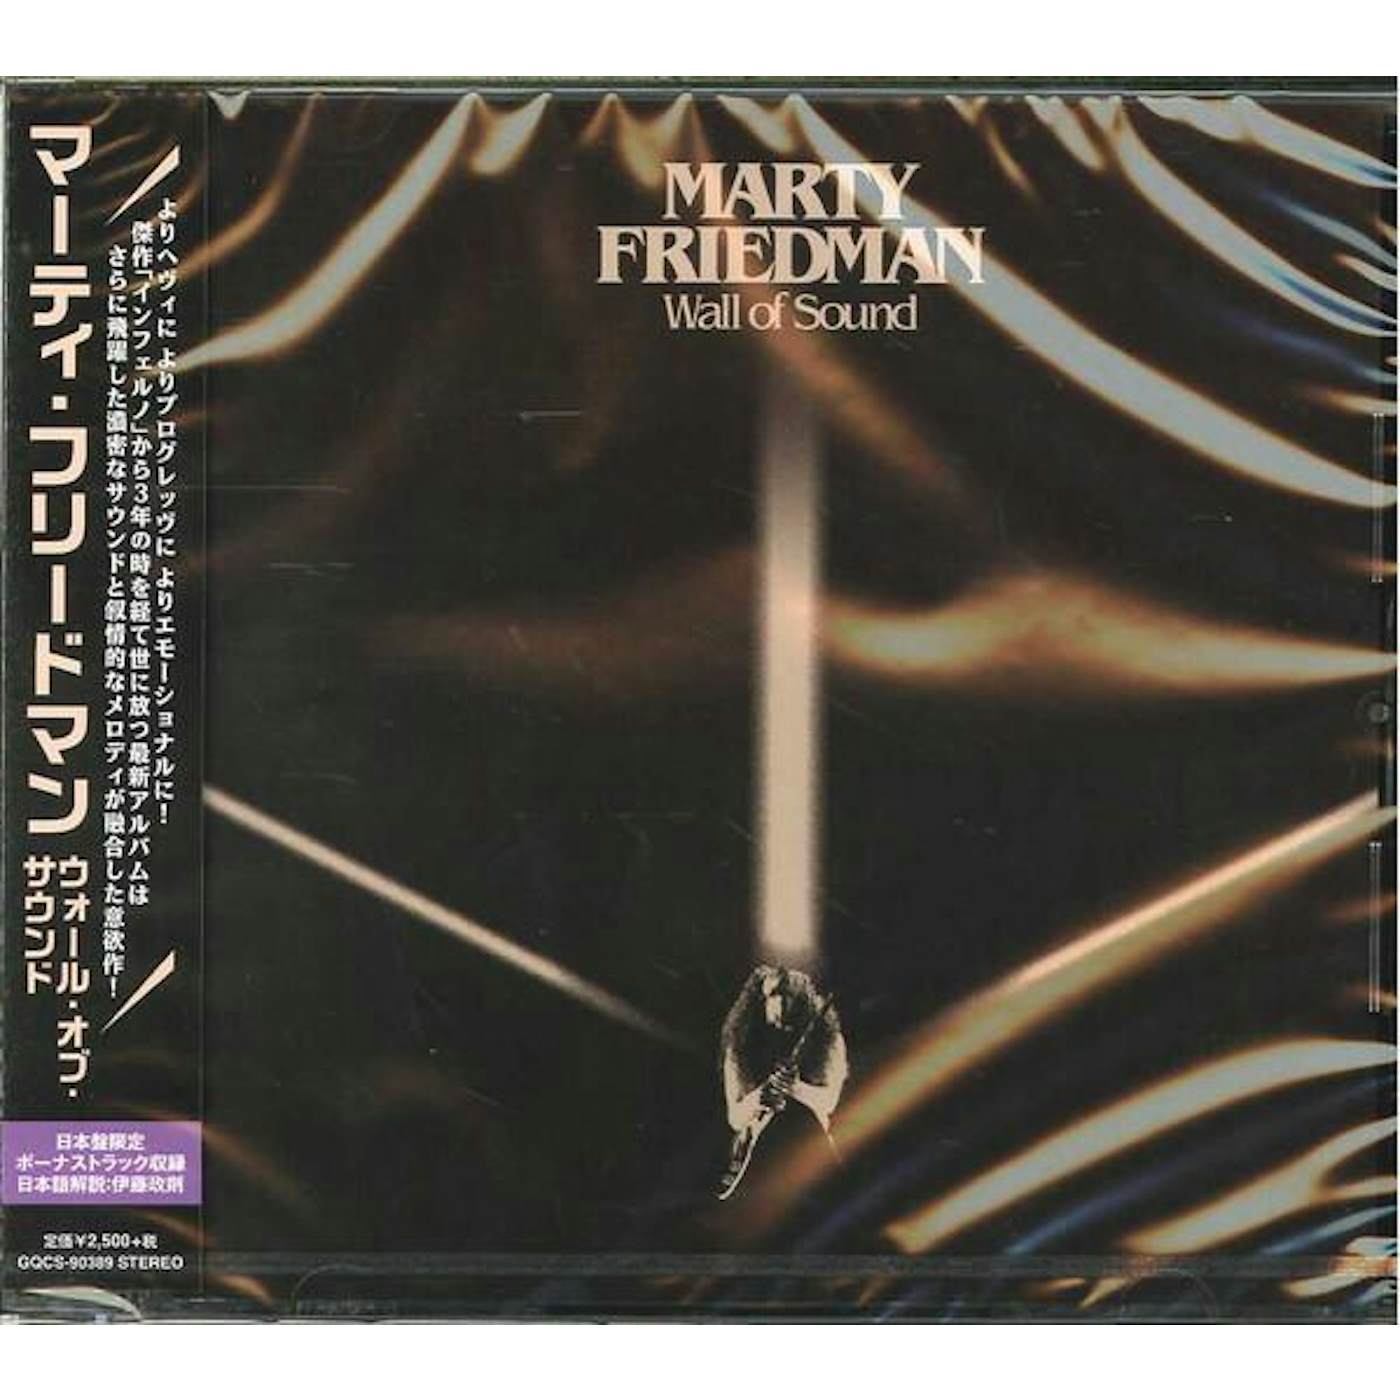 Marty Friedman WALL OF SOUND (BONUS TRACK) CD